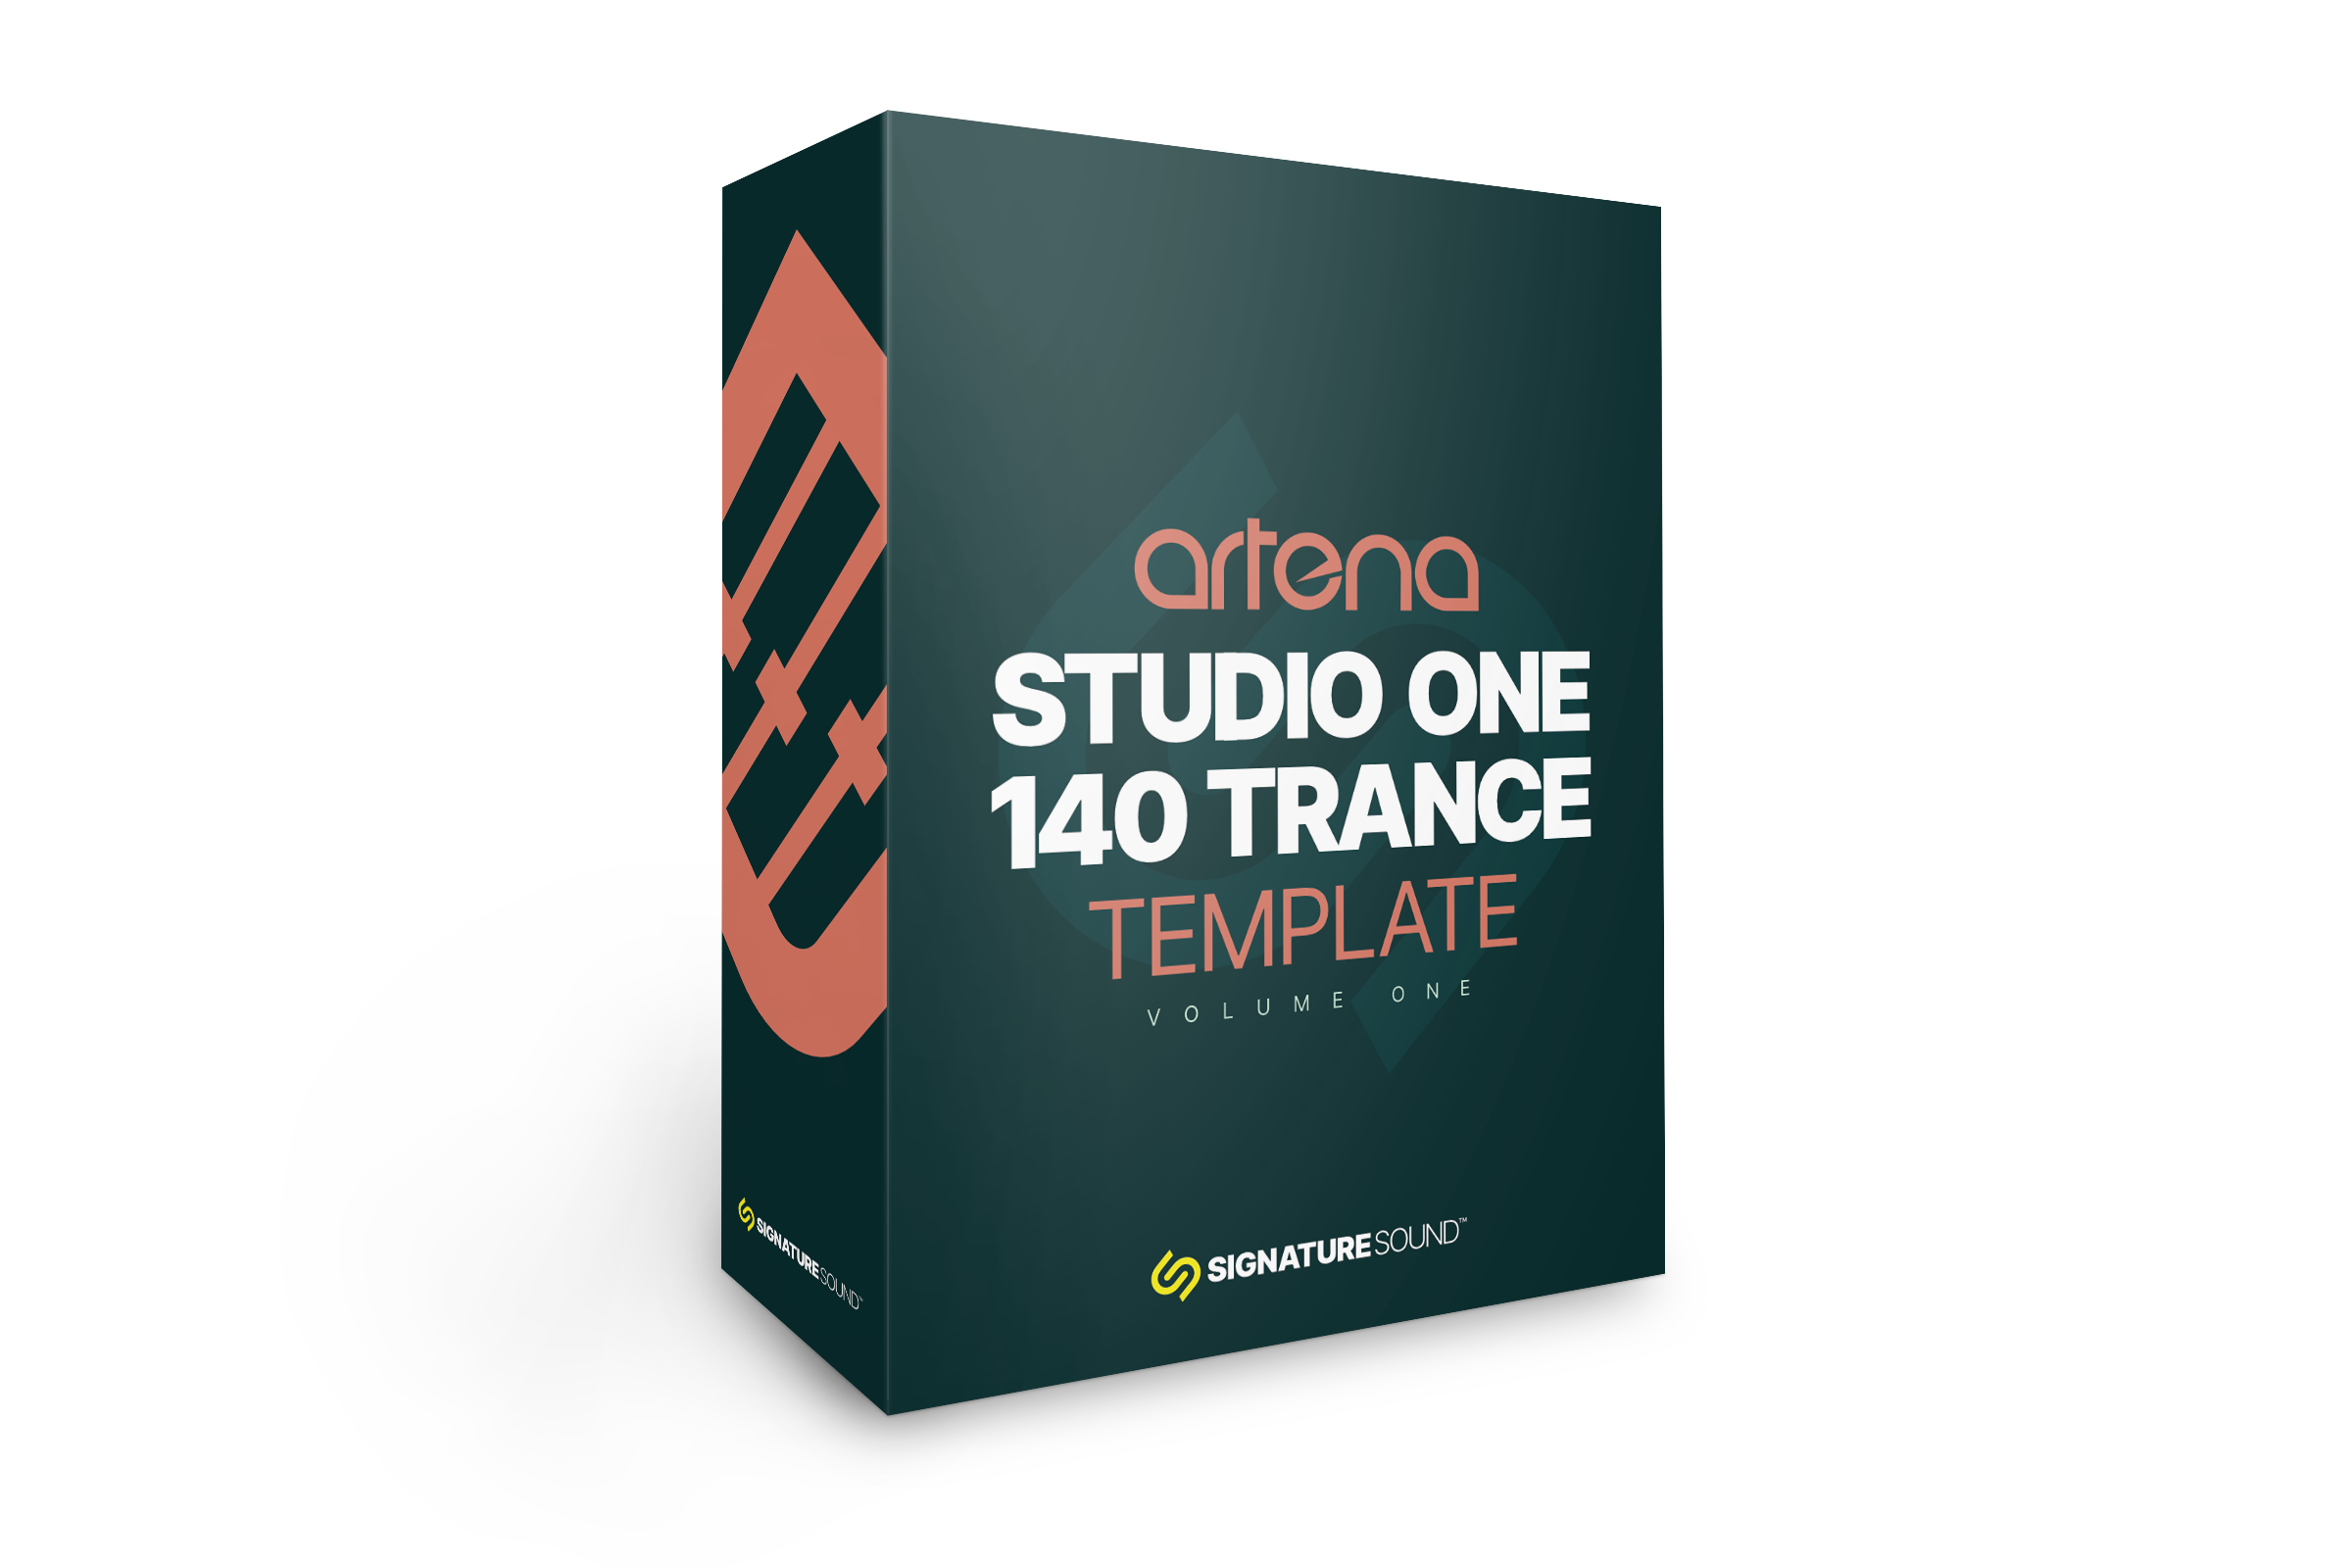 Artena 140 Trance Template [Studio One]